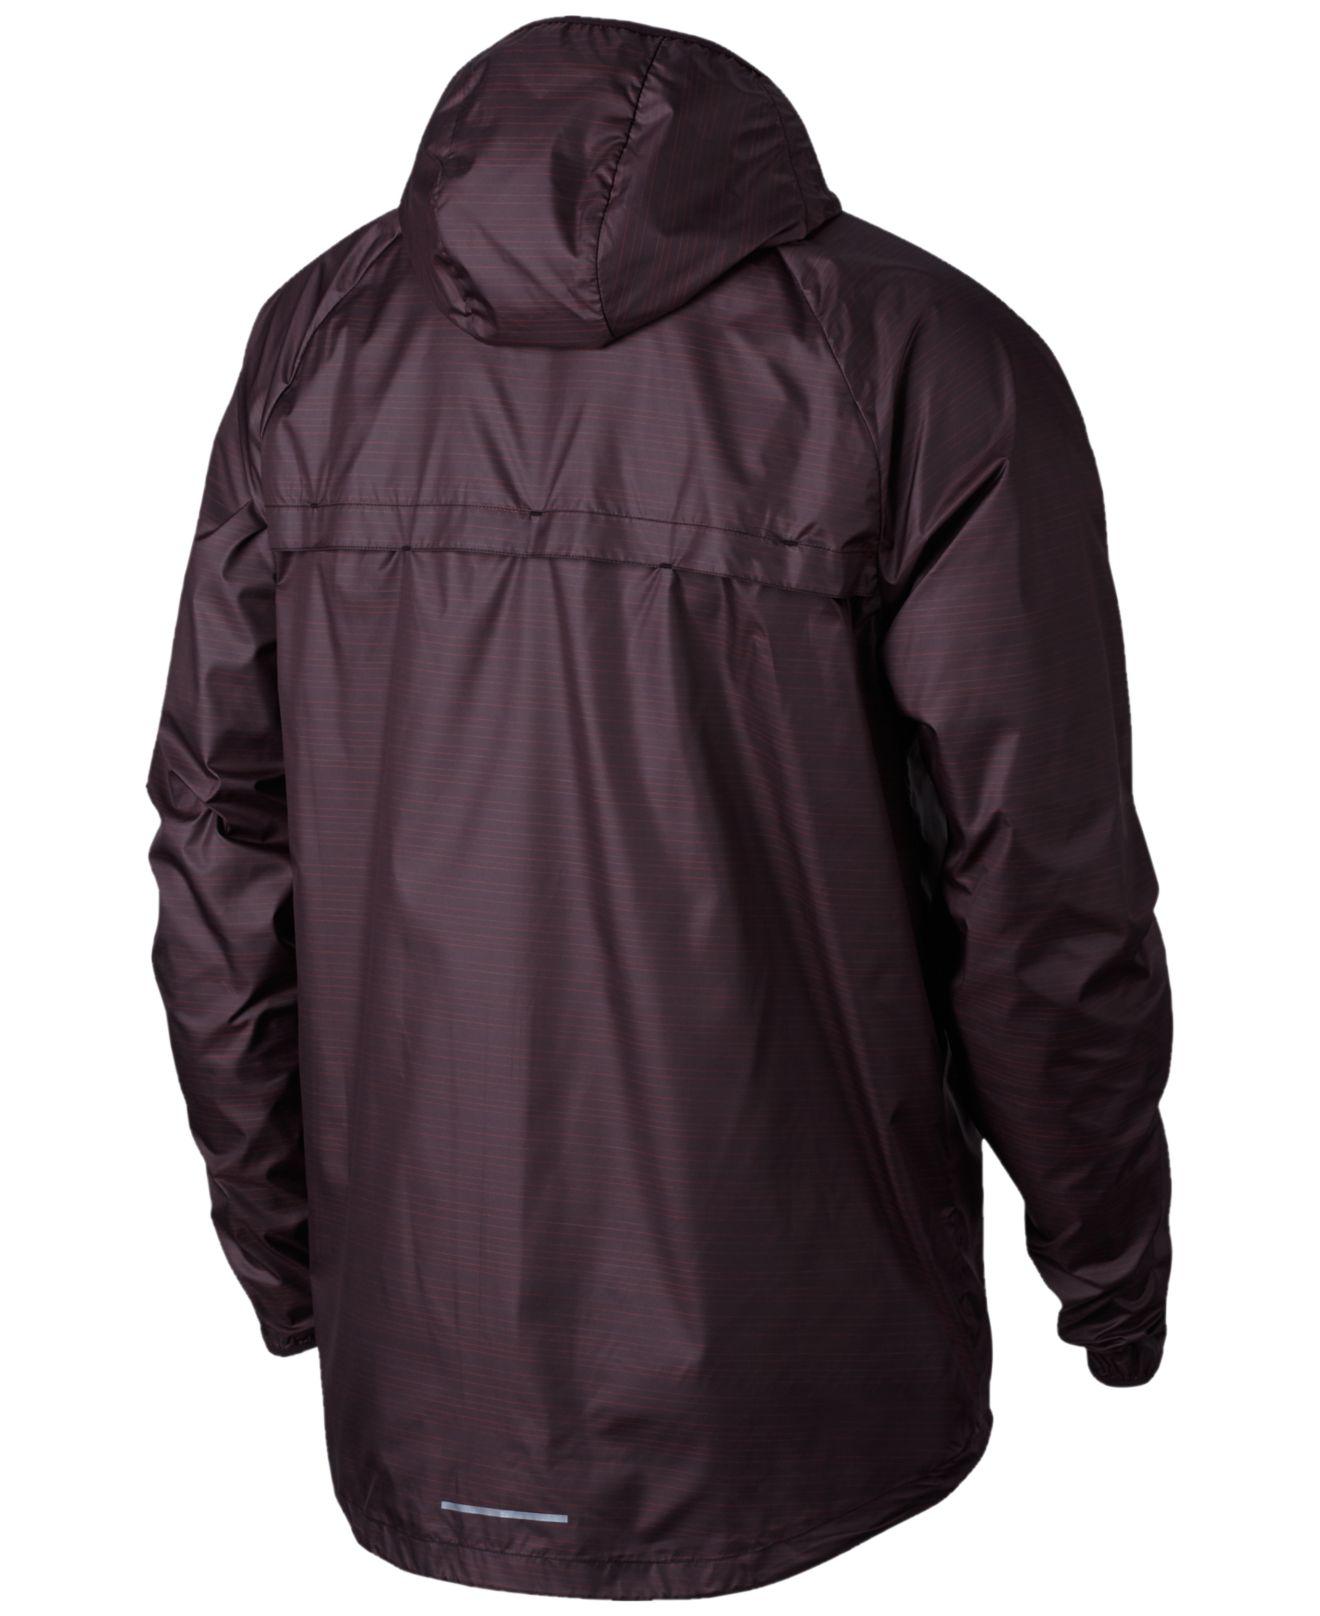 Nike Synthetic Men's Essential Hooded Water-resistant Running Jacket in ...